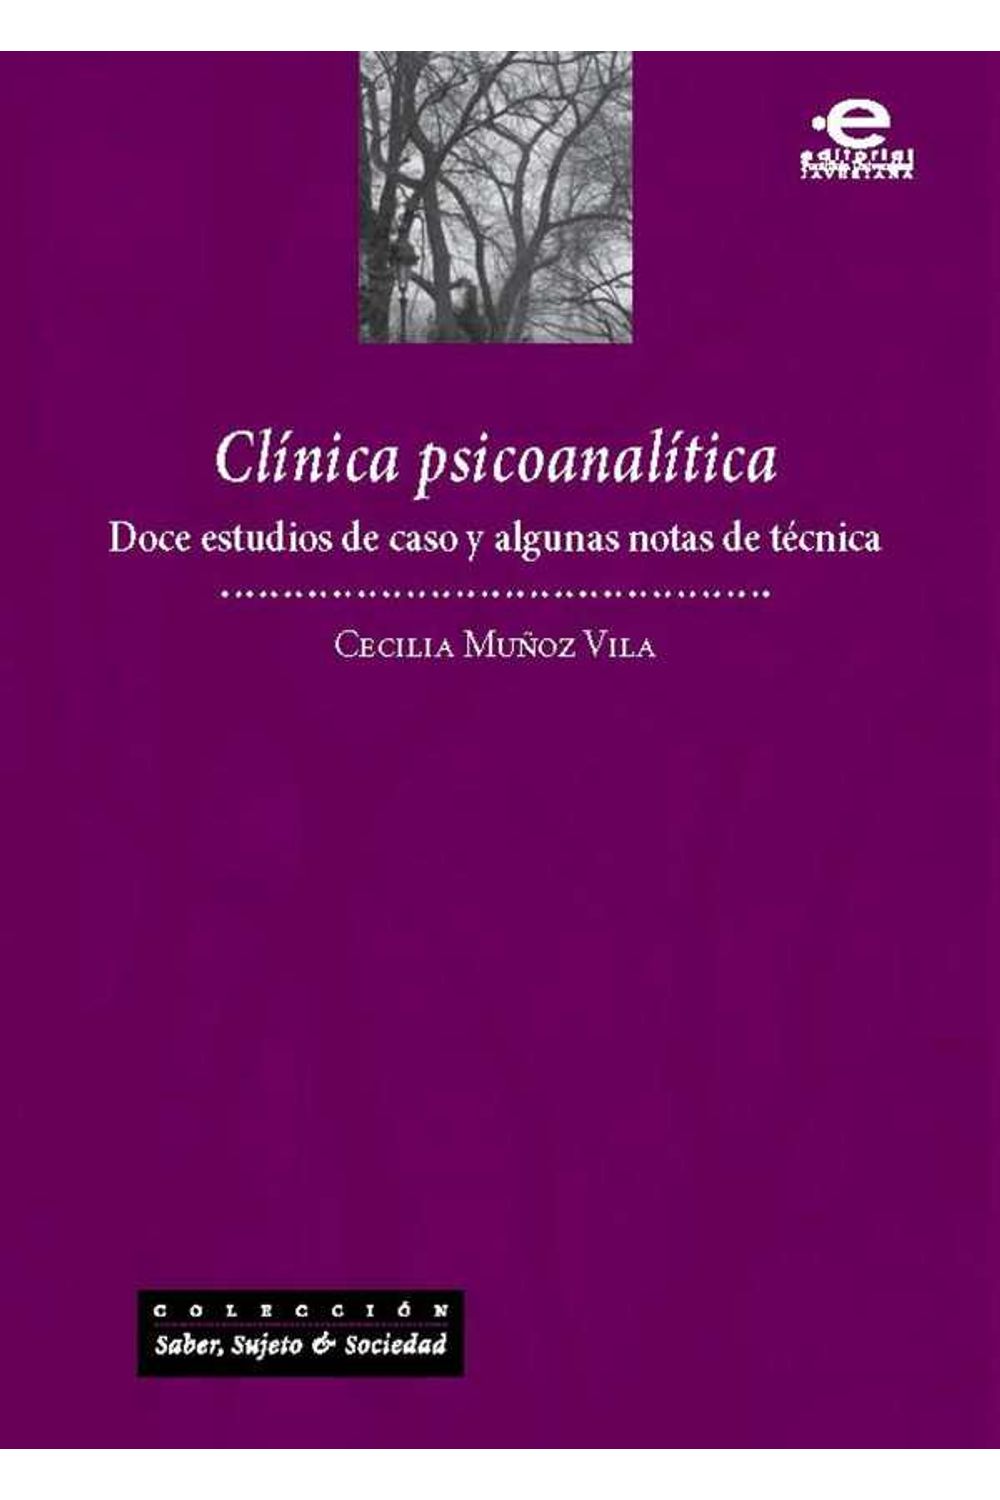 bw-cliacutenica-psicoanaliacutetica-editorial-pontificia-universidad-javeriana-9789587168679